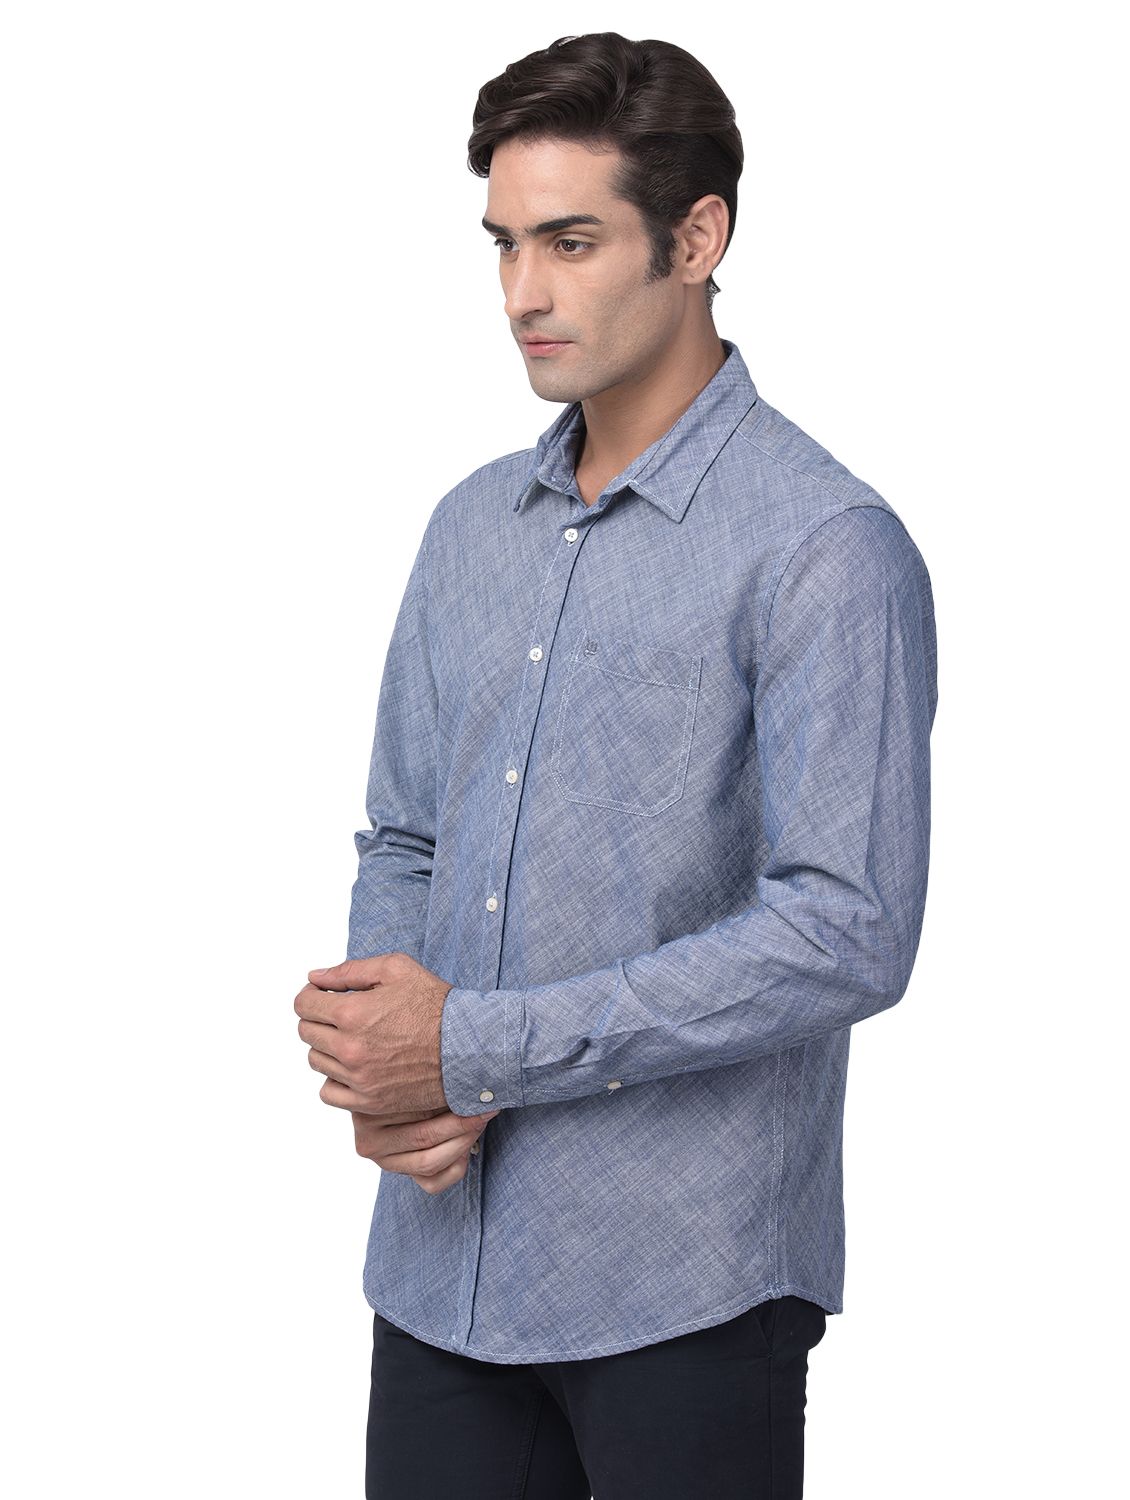 Denim blue long sleeves shirt